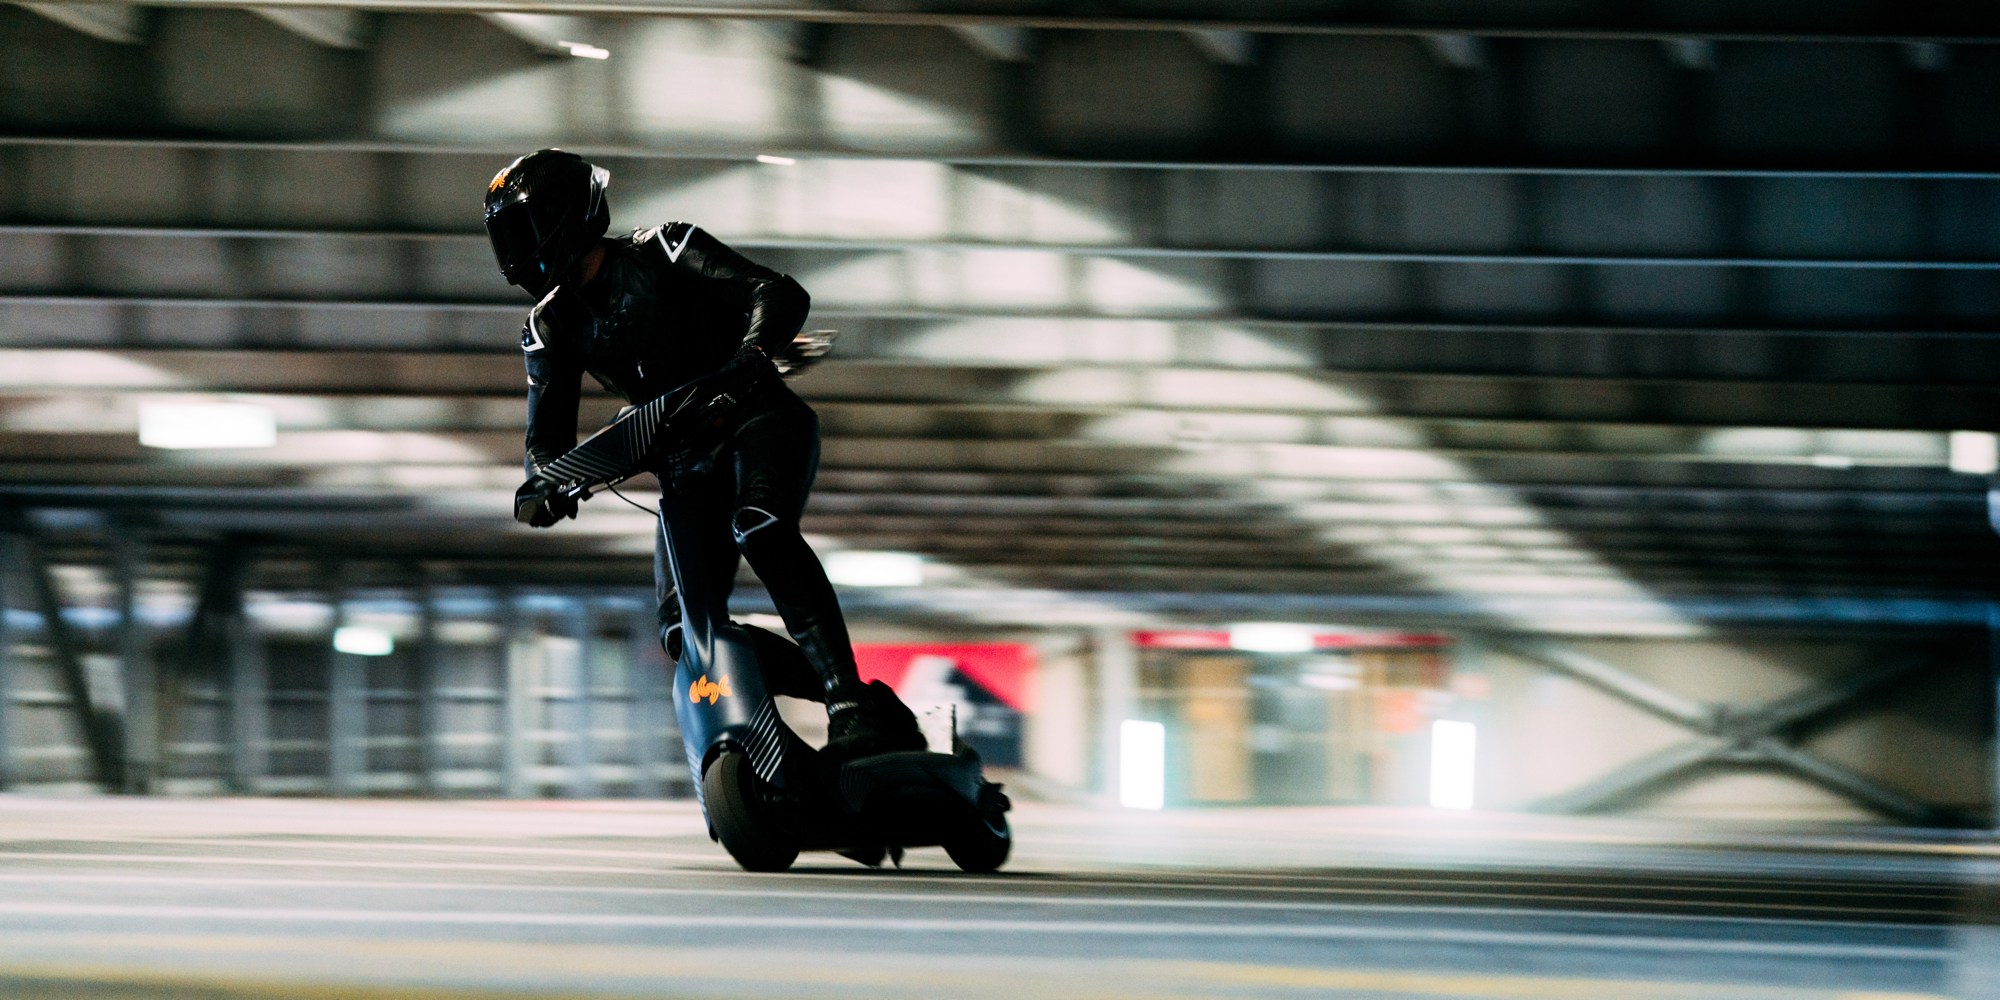 Lav Særlig klarhed First ever 60 MPH standing electric scooter built for racing unveiled